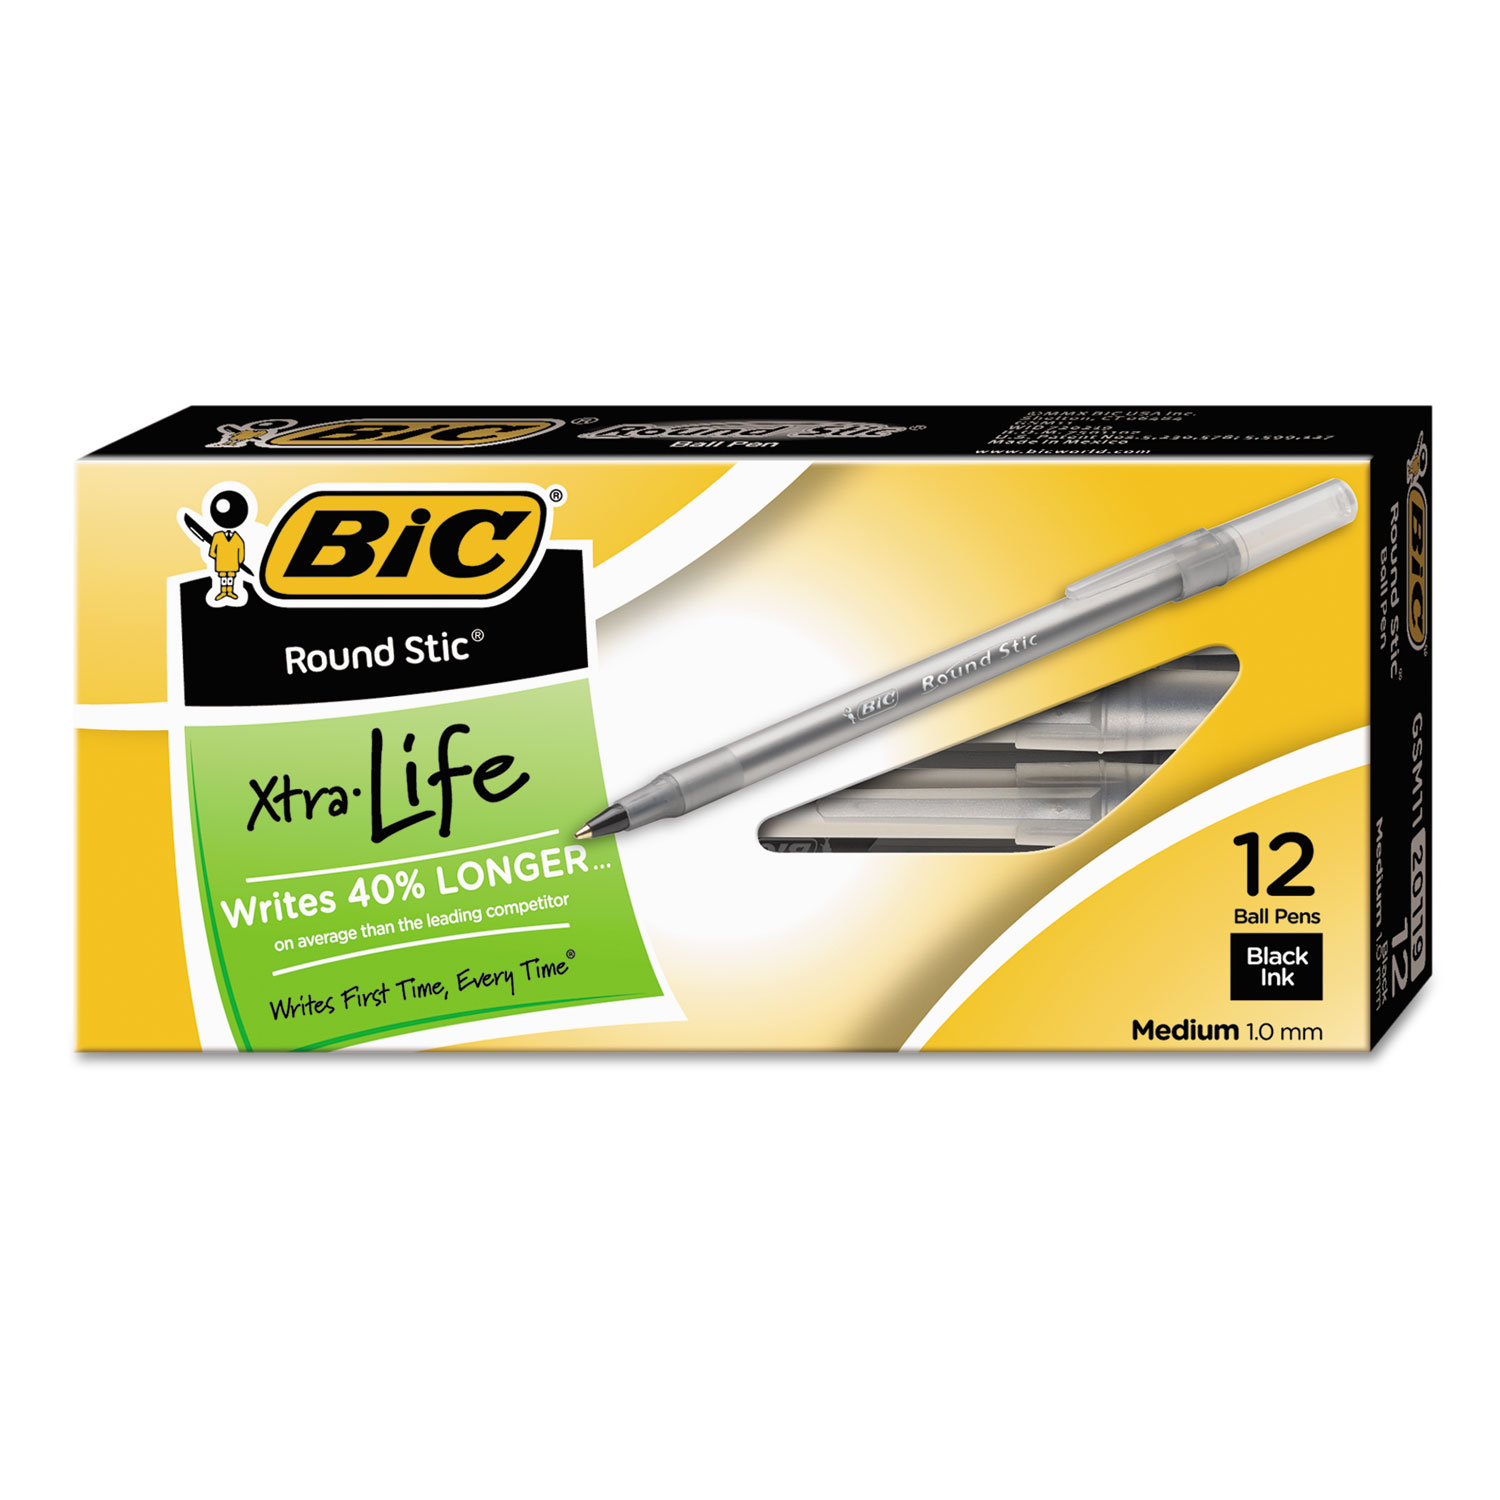 Round Stic Xtra Life Stick Ballpoint Pen, 1mm, Black Ink, Smoke Barrel, Dozen